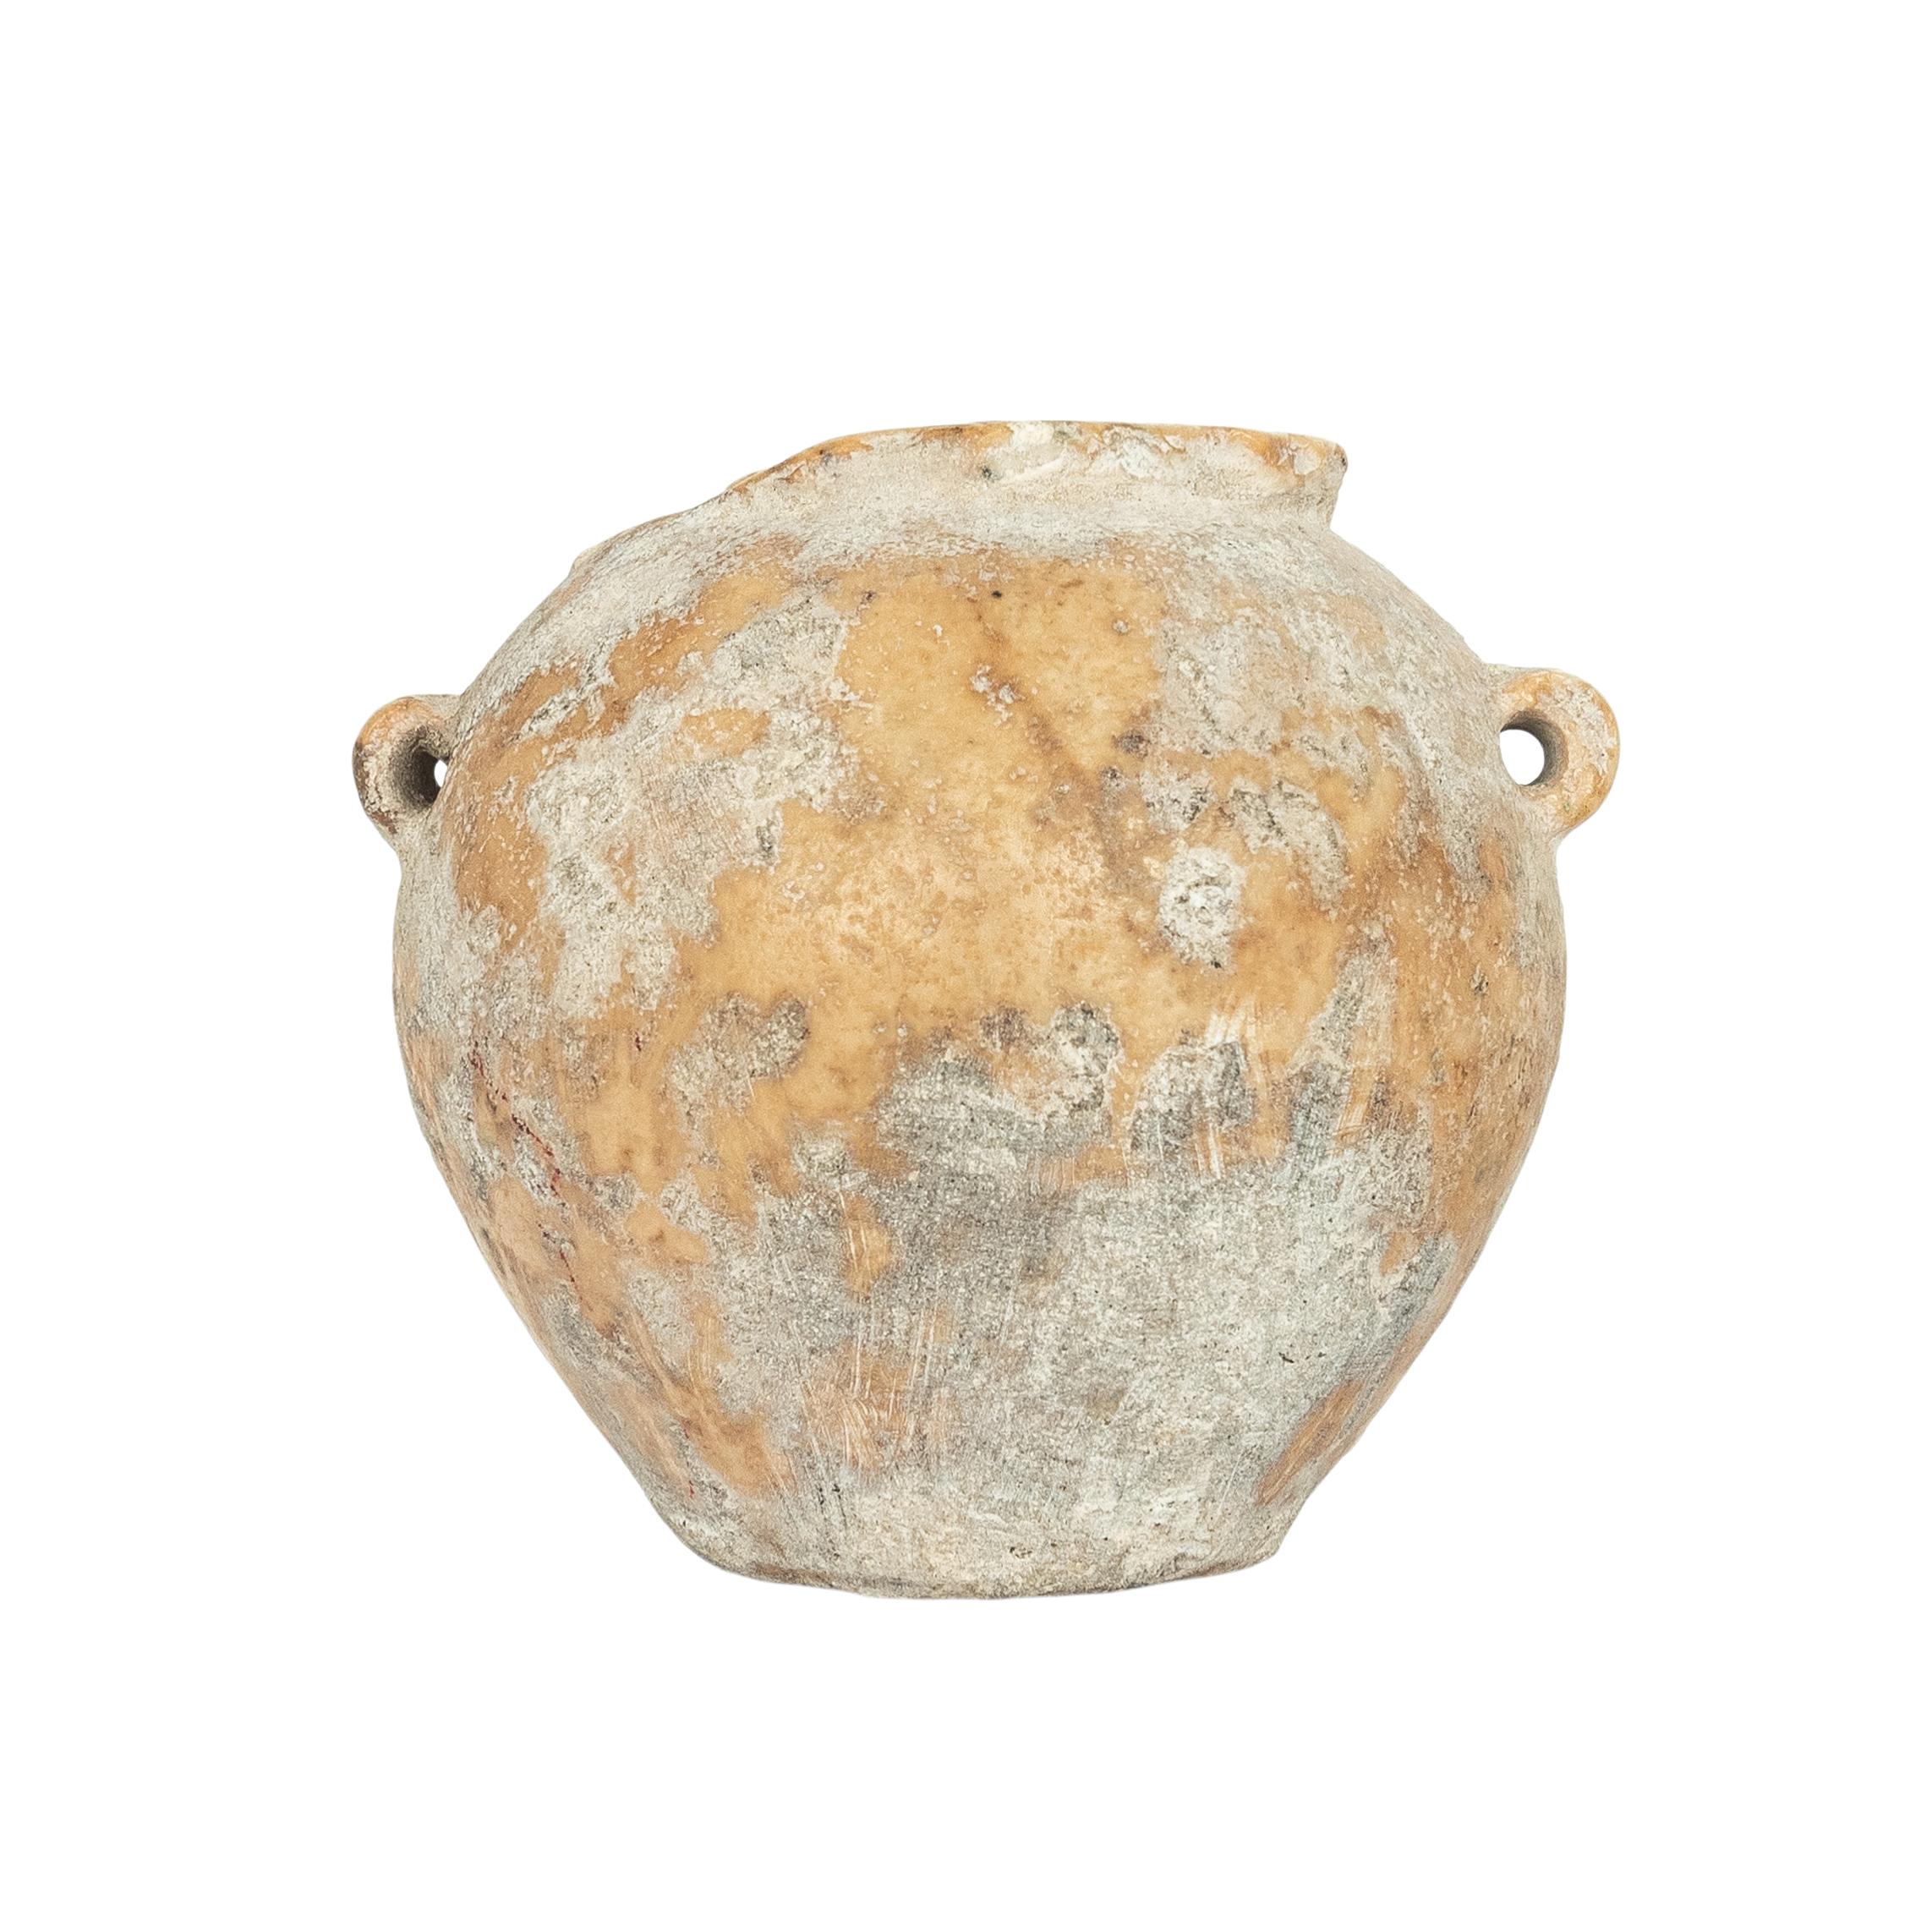 Archaistic Ancient Egyptian Old Kingdom Miniature Lime Stone Vessel Jar 2600-2800 BCE For Sale